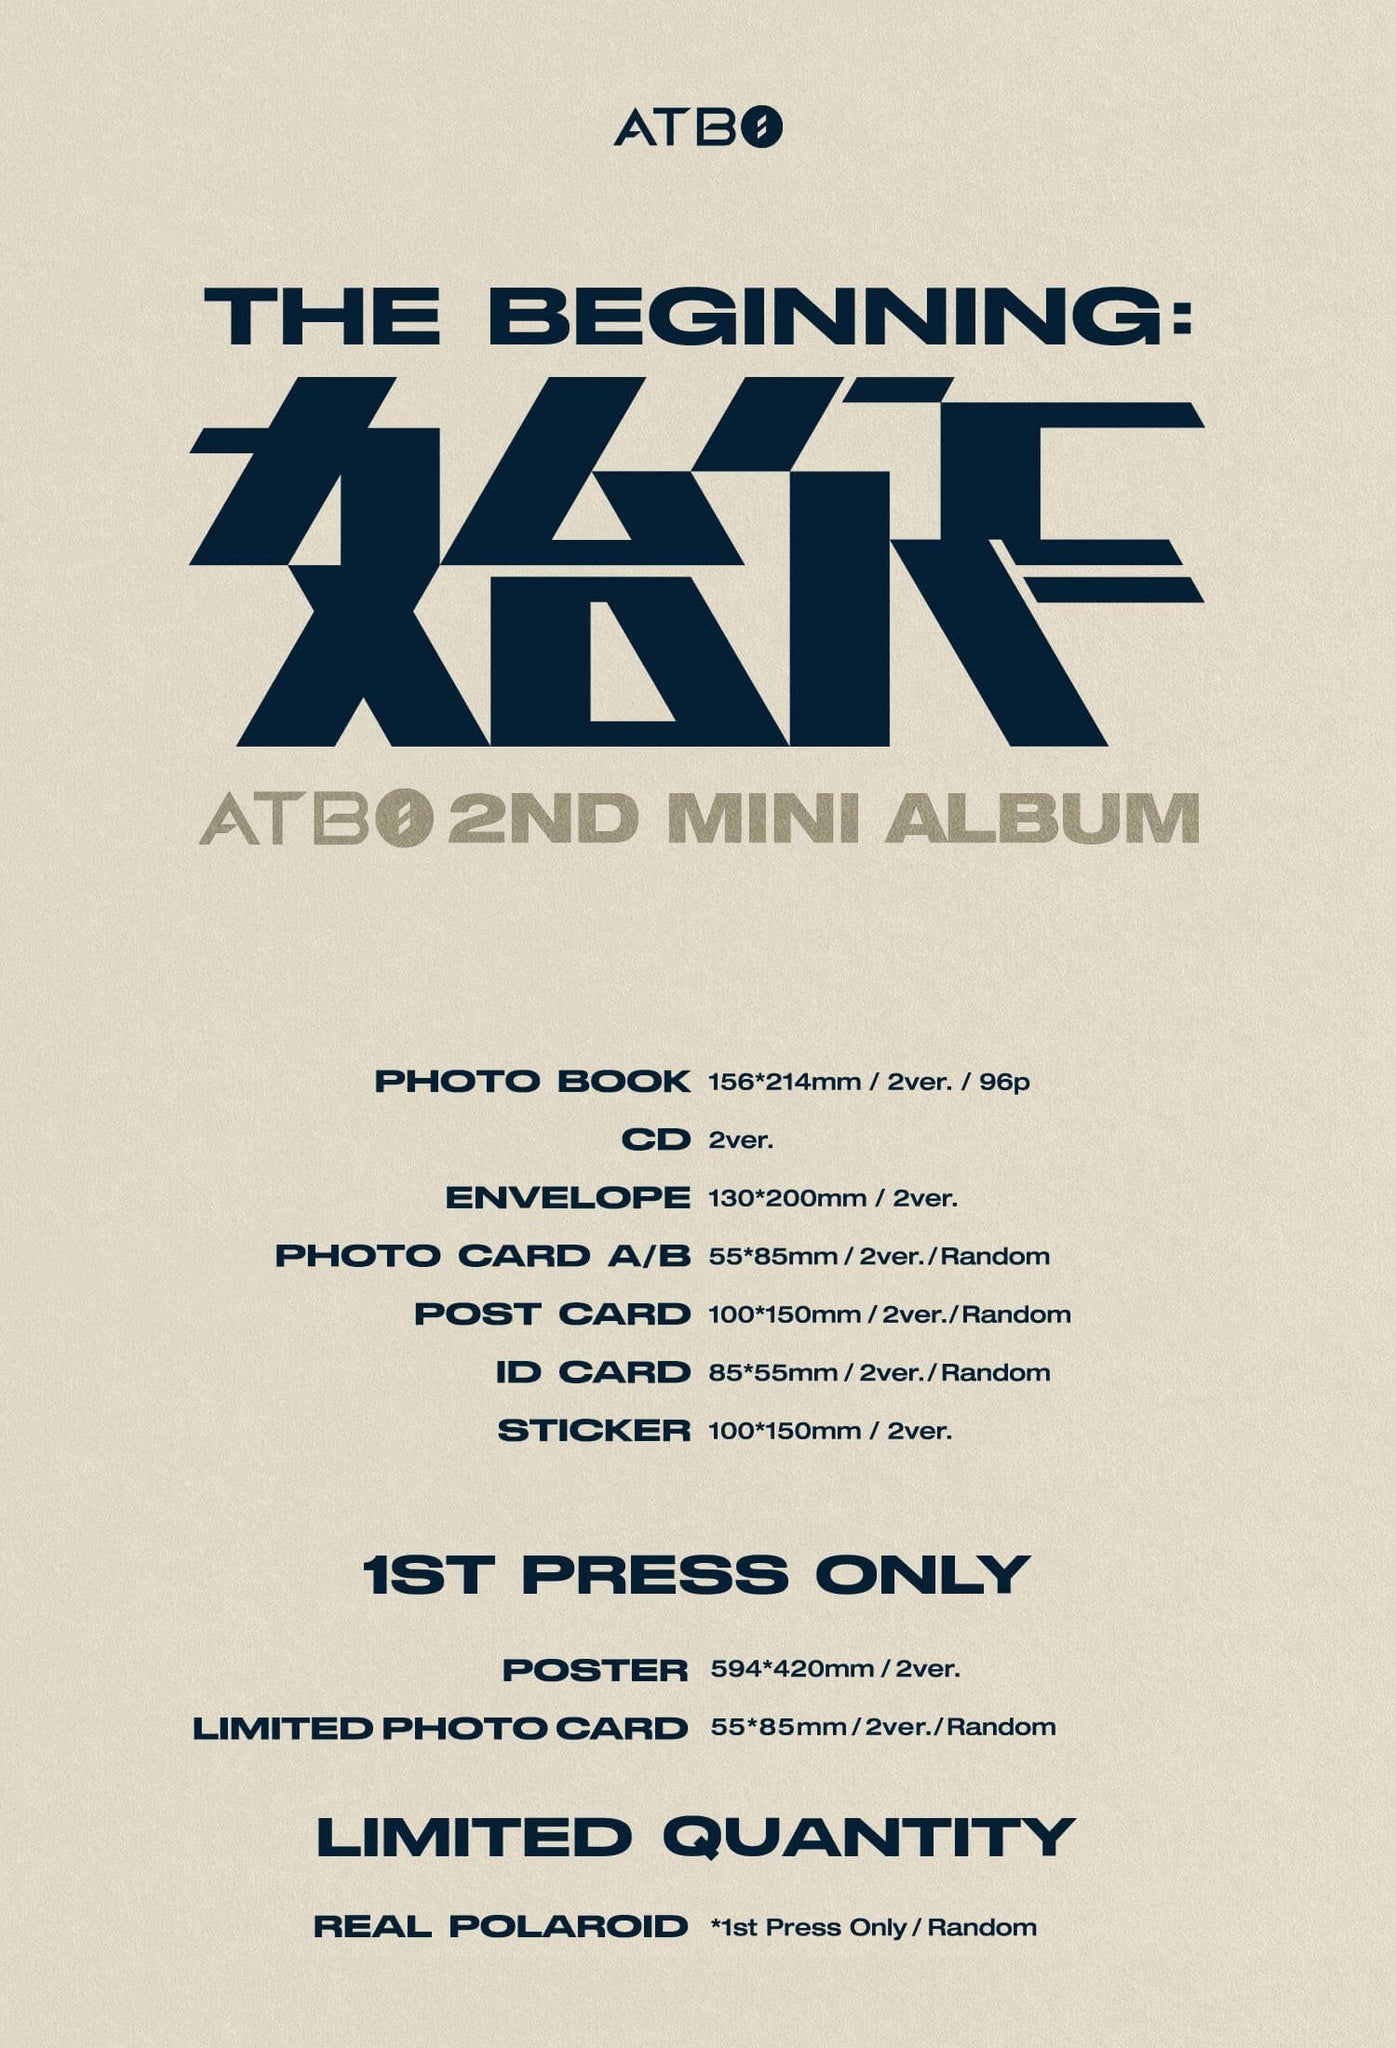 ATBO 2nd Mini Album The Beginning: 始作 Album Info